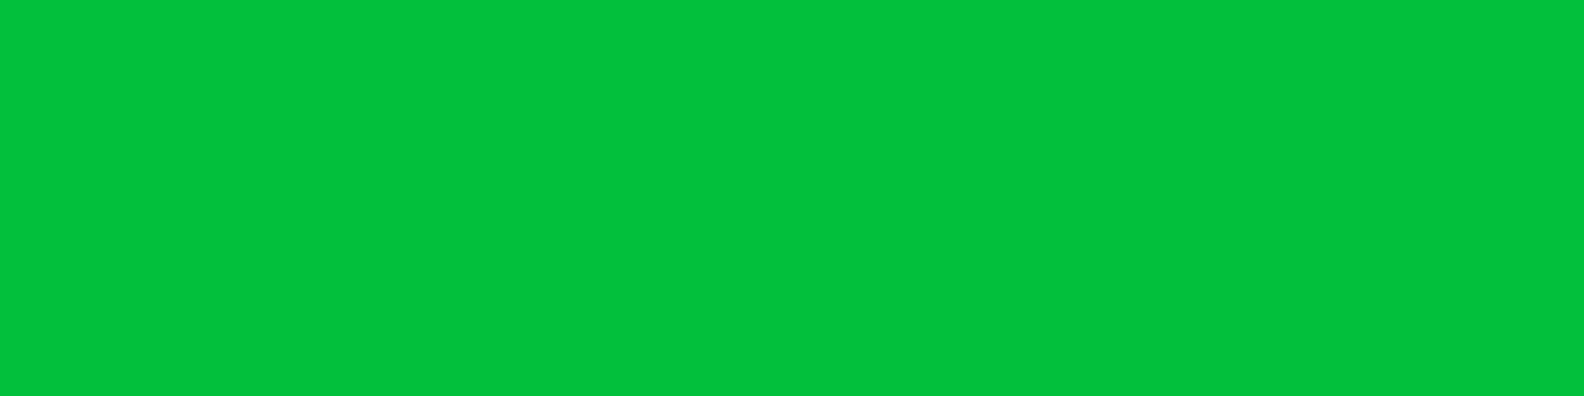 1584x396 Dark Pastel Green Solid Color Background